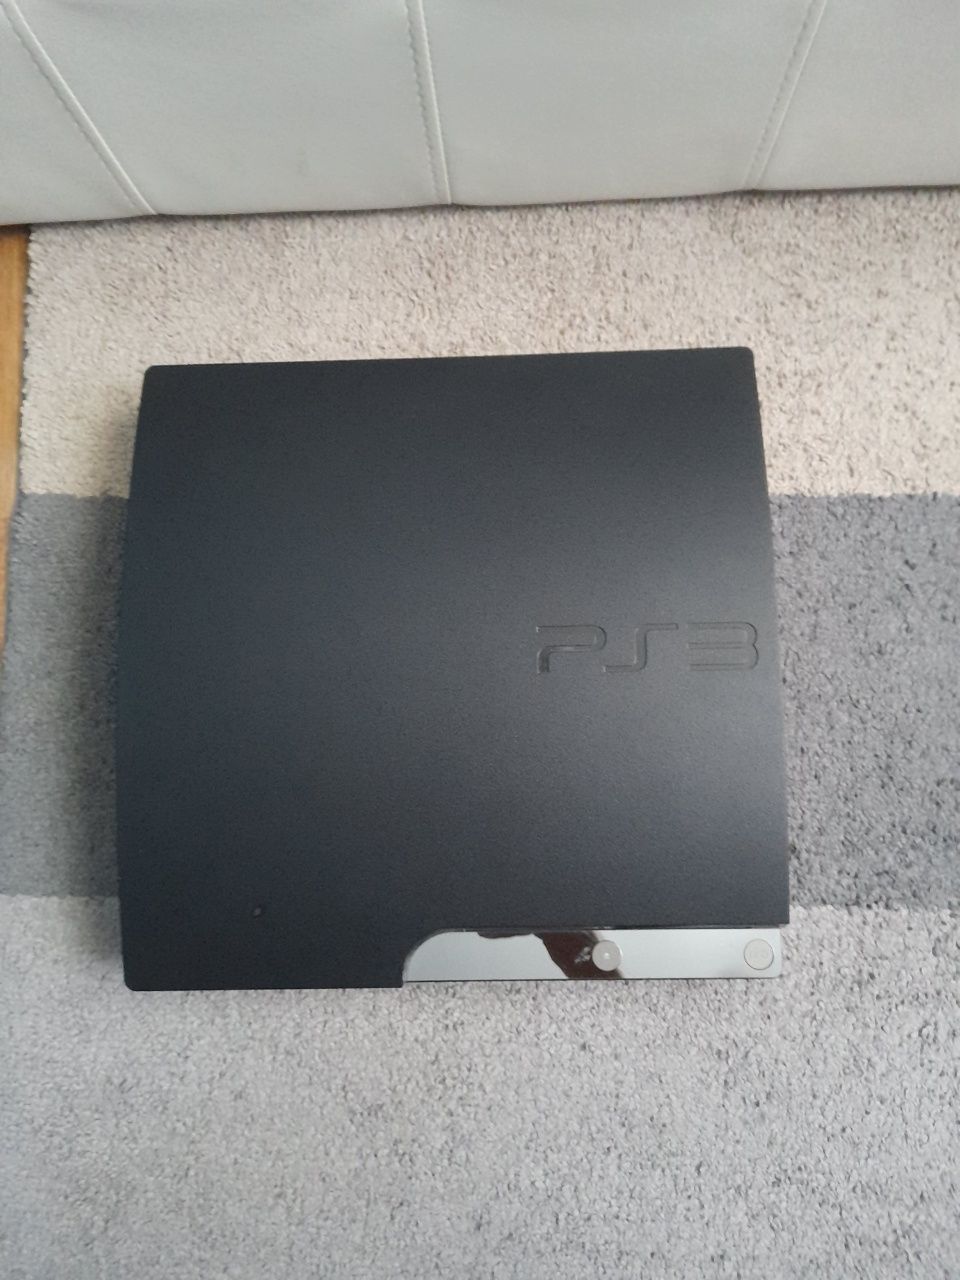 PlayStation 3 slim PS3